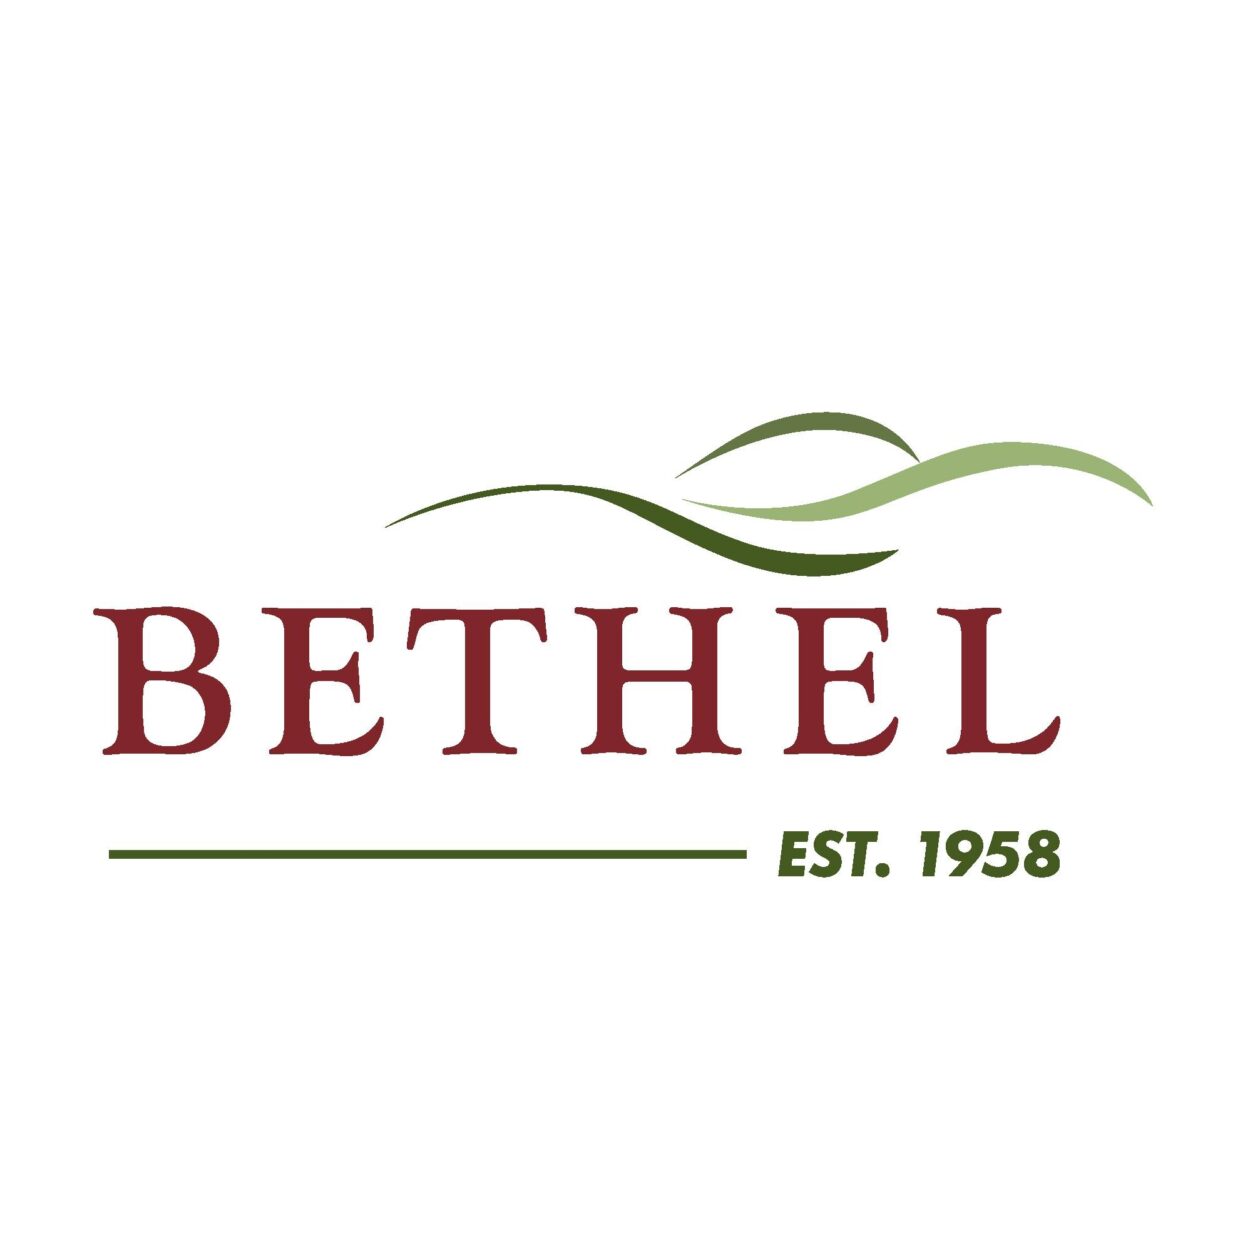 Bethel Farms